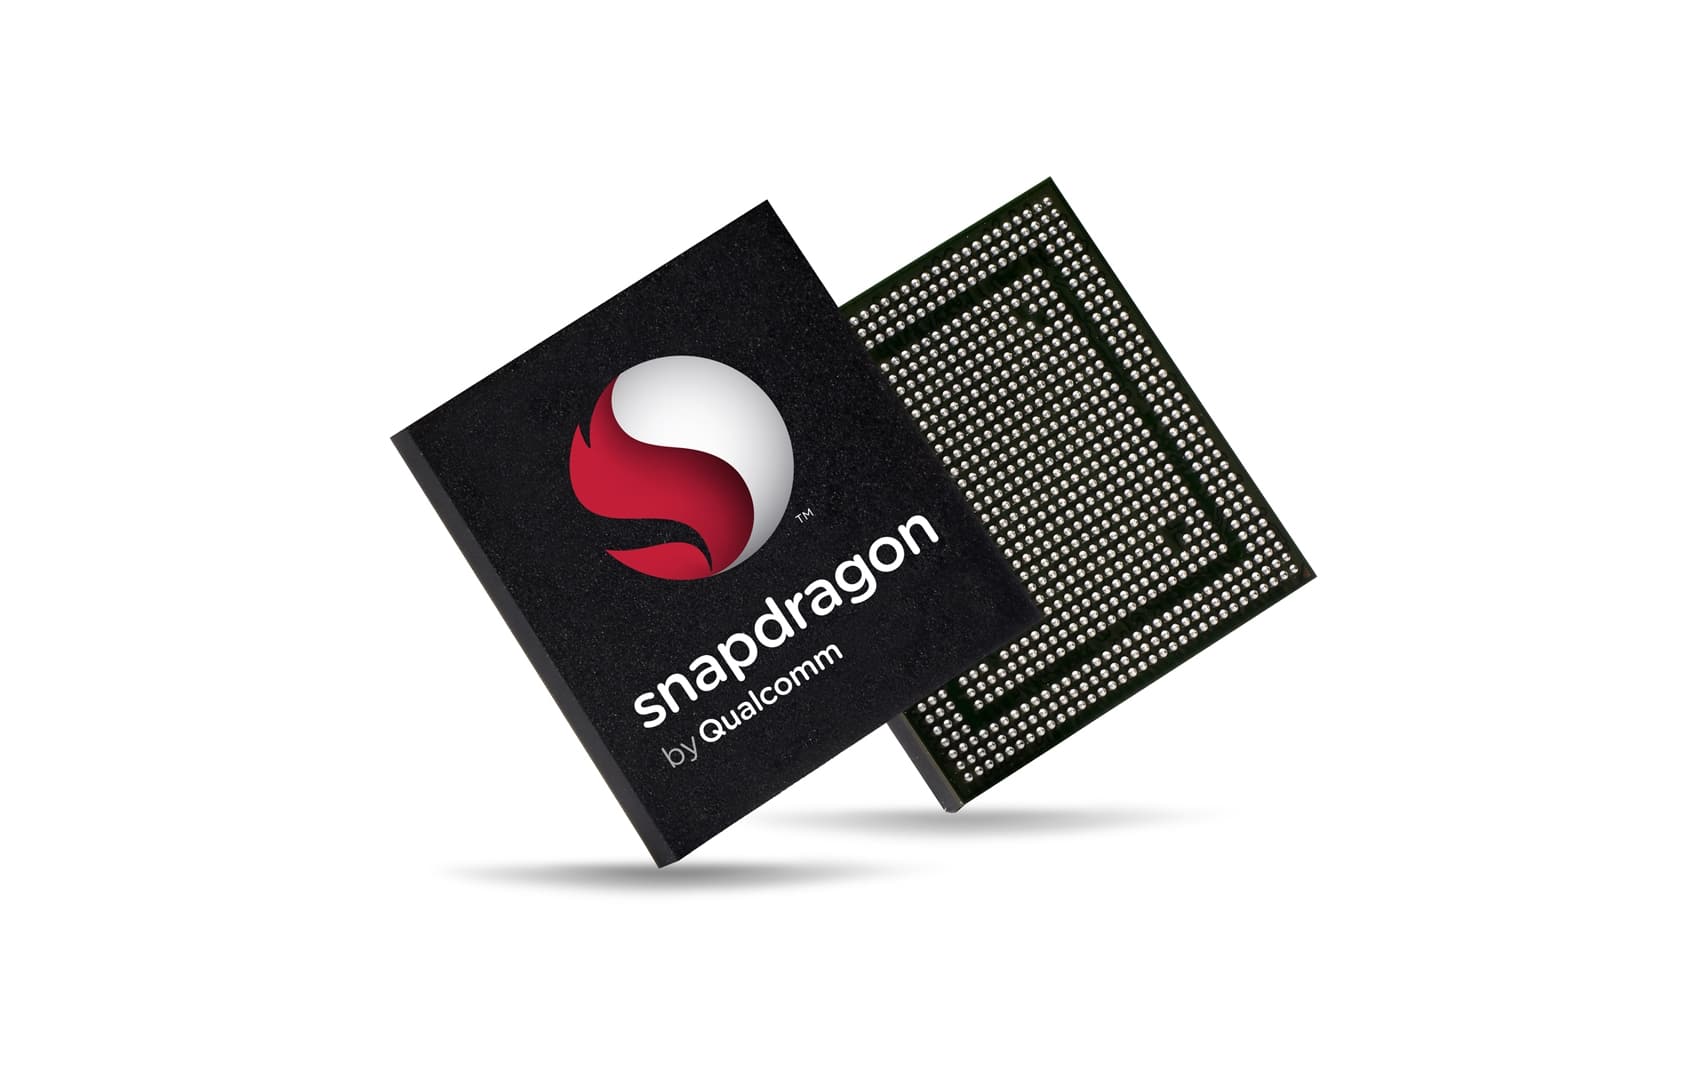 Snapdragon New